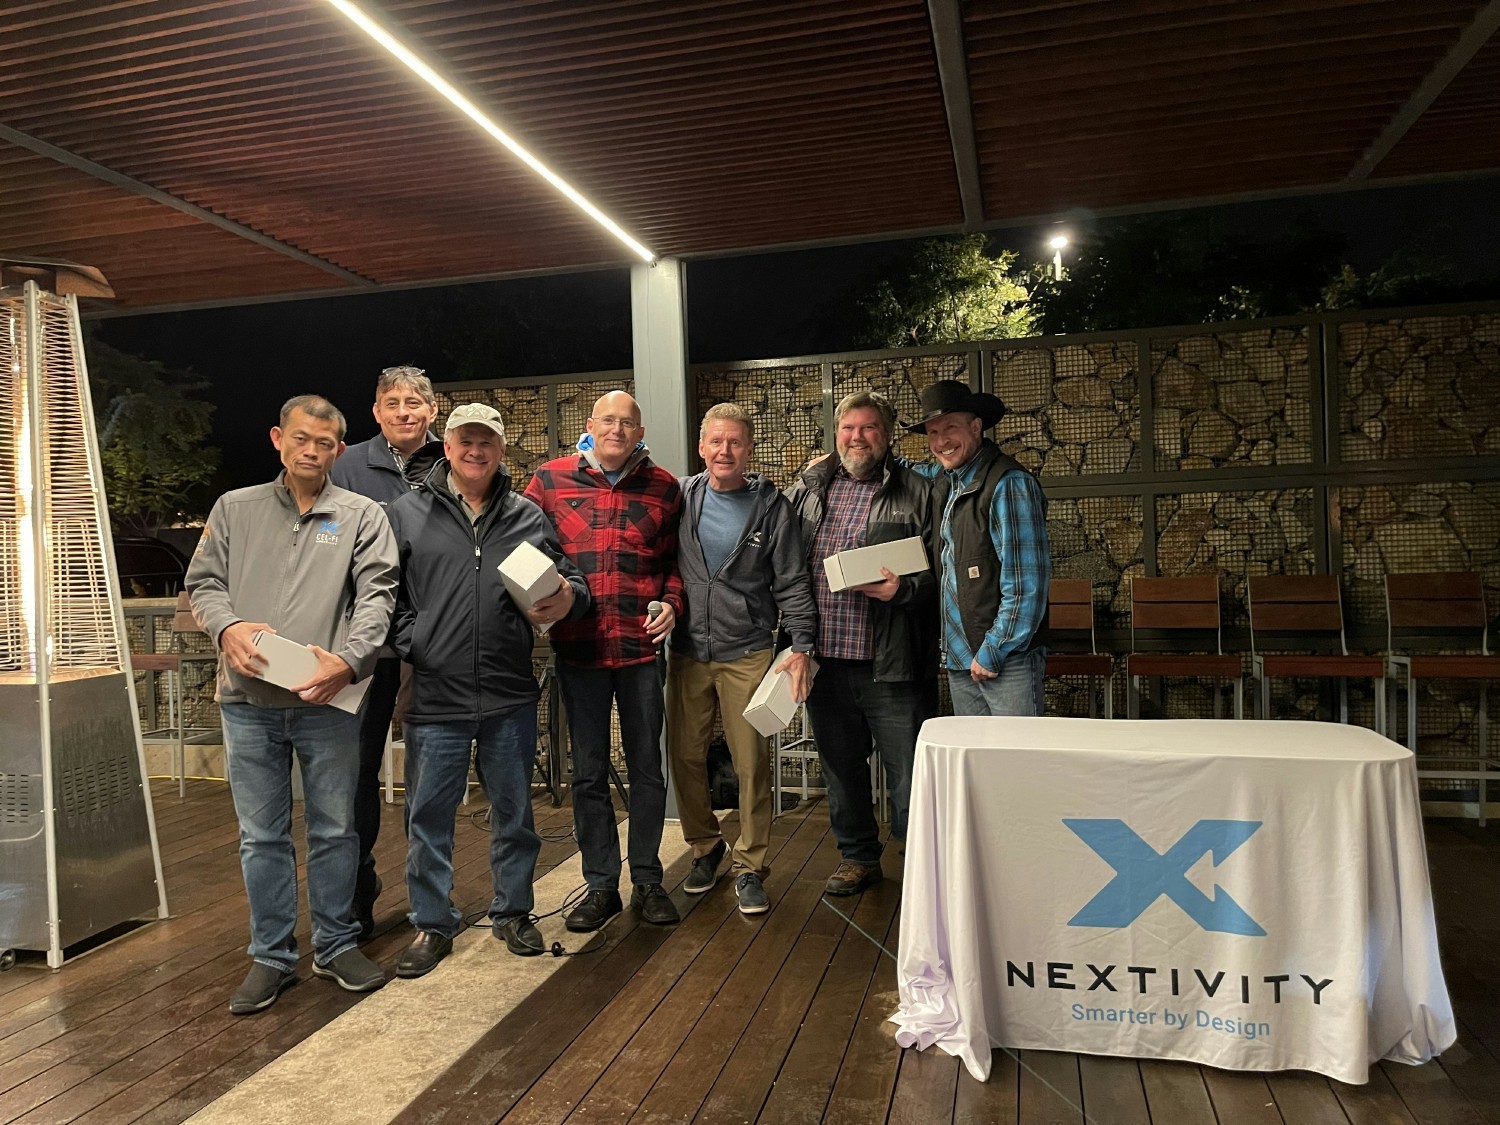 Team Nextivity!